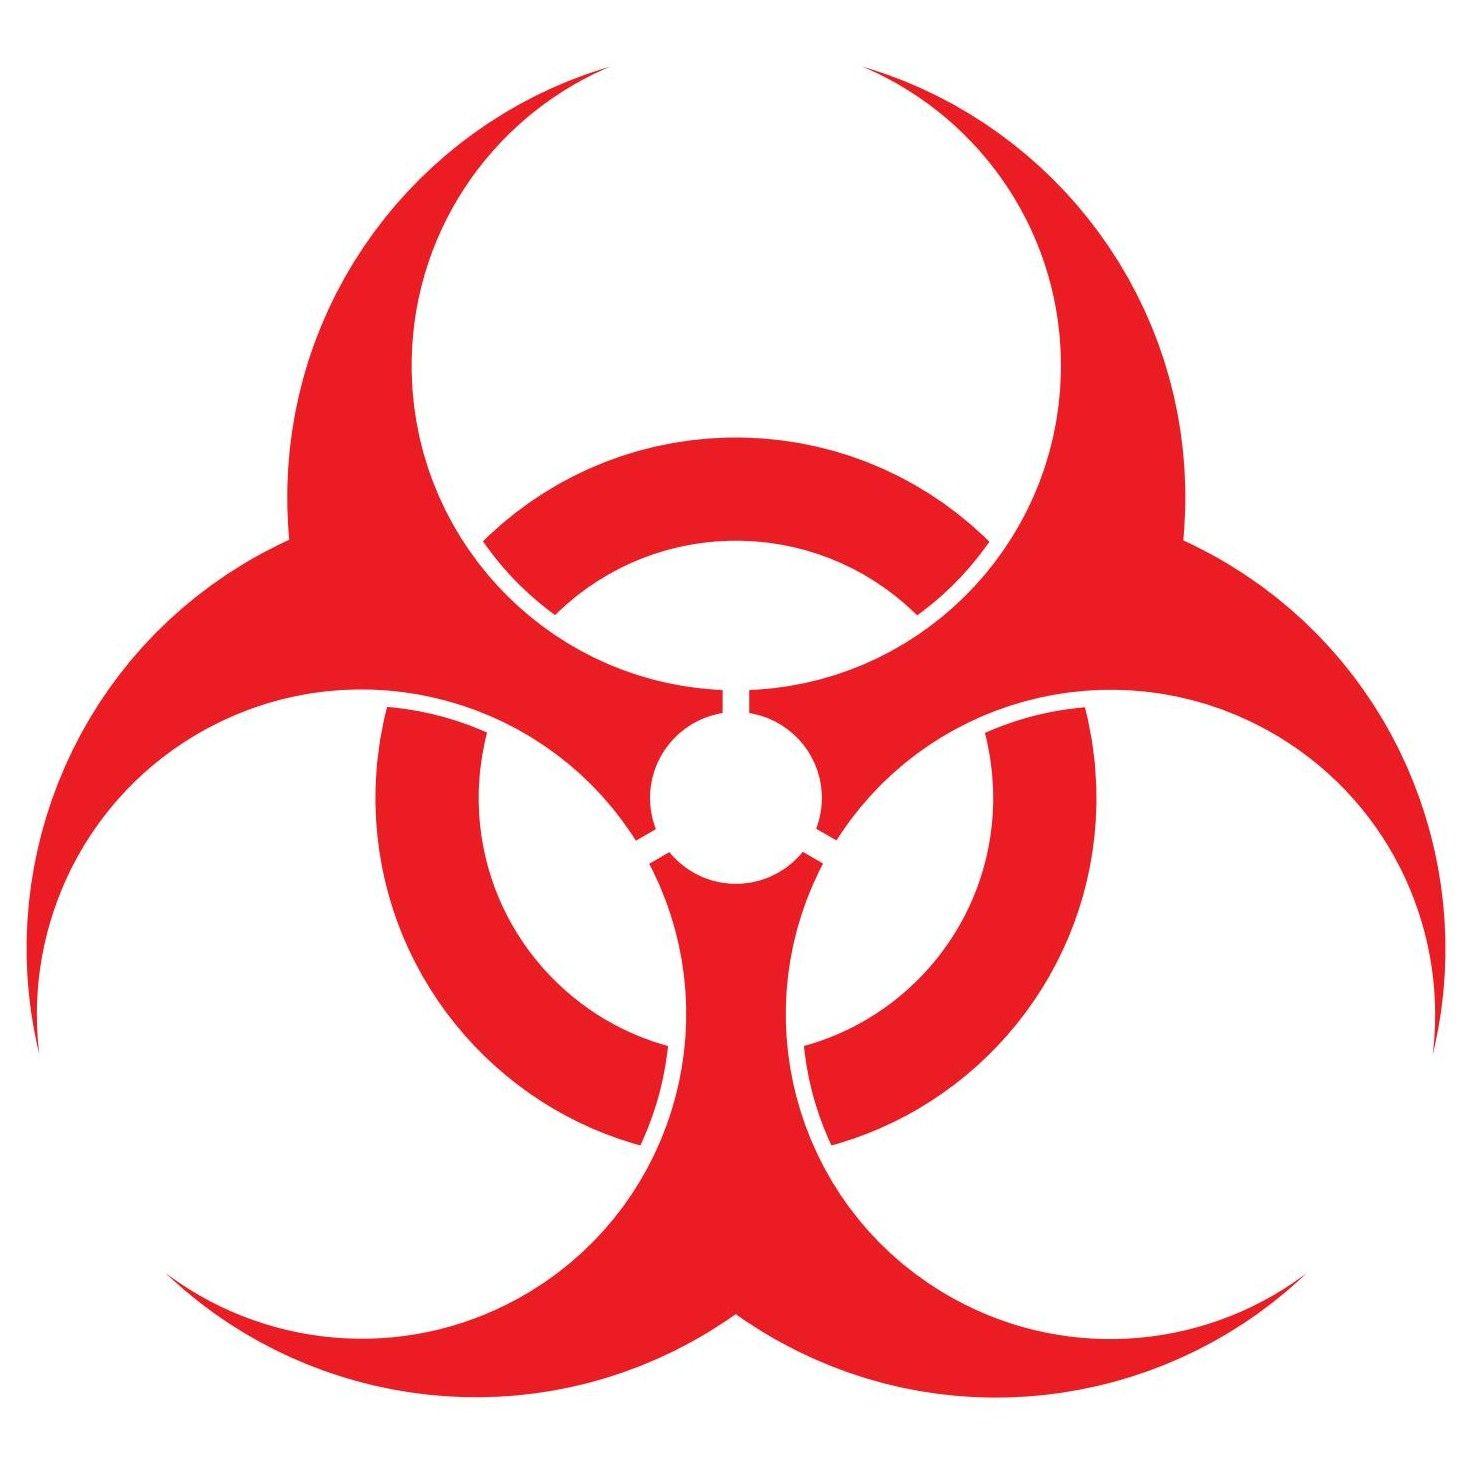 Biohazard Logo - Biohazard Symbol Red. Universal Labels Logos Symbols. Symbols